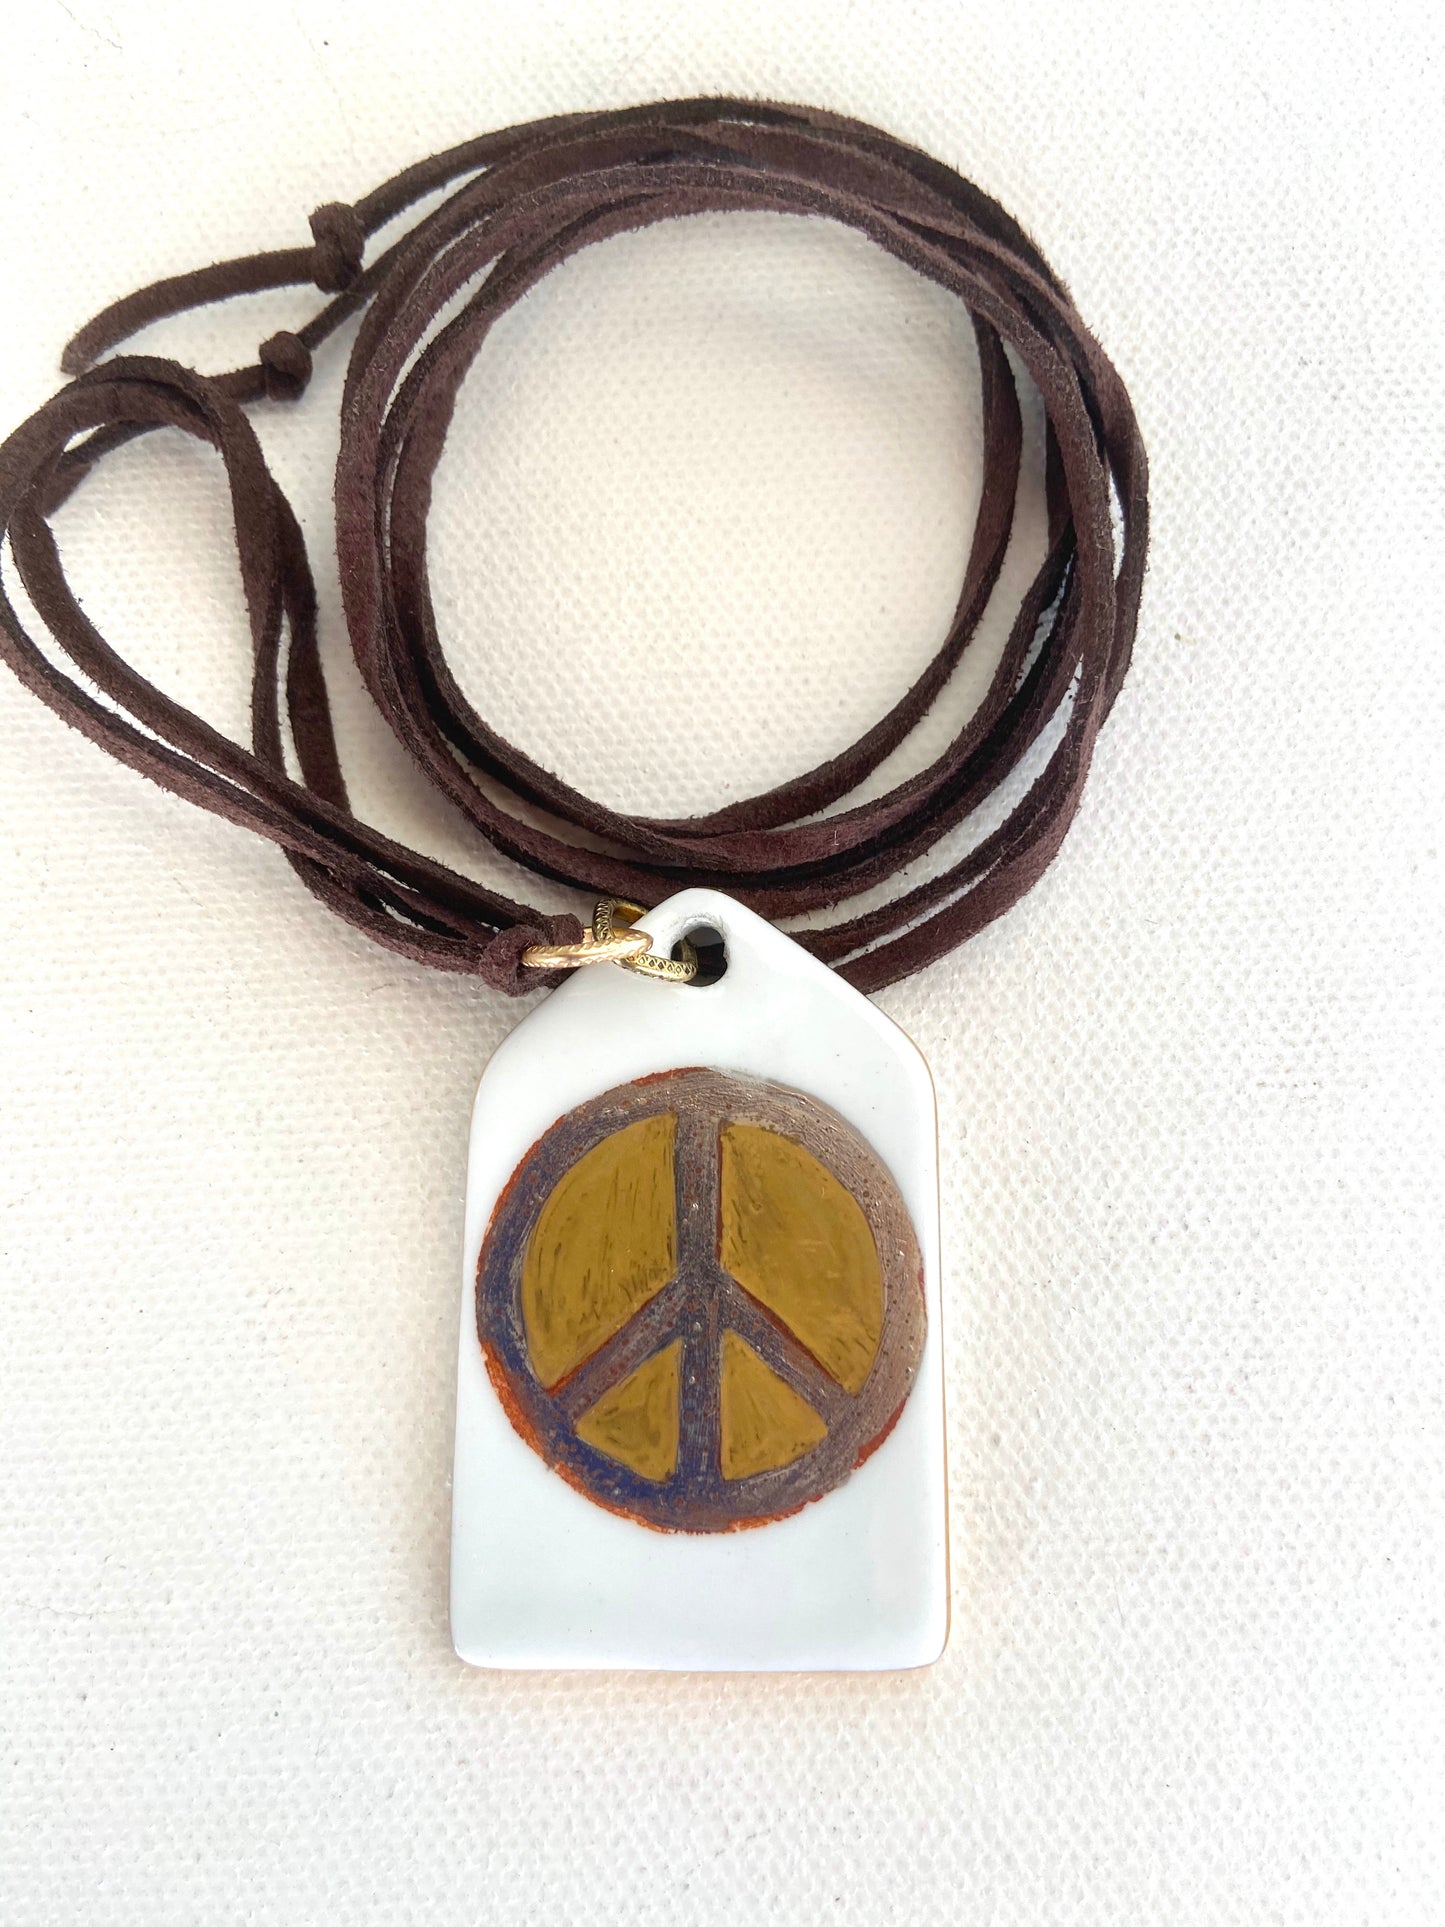 Peace Sign Pendant Necklace